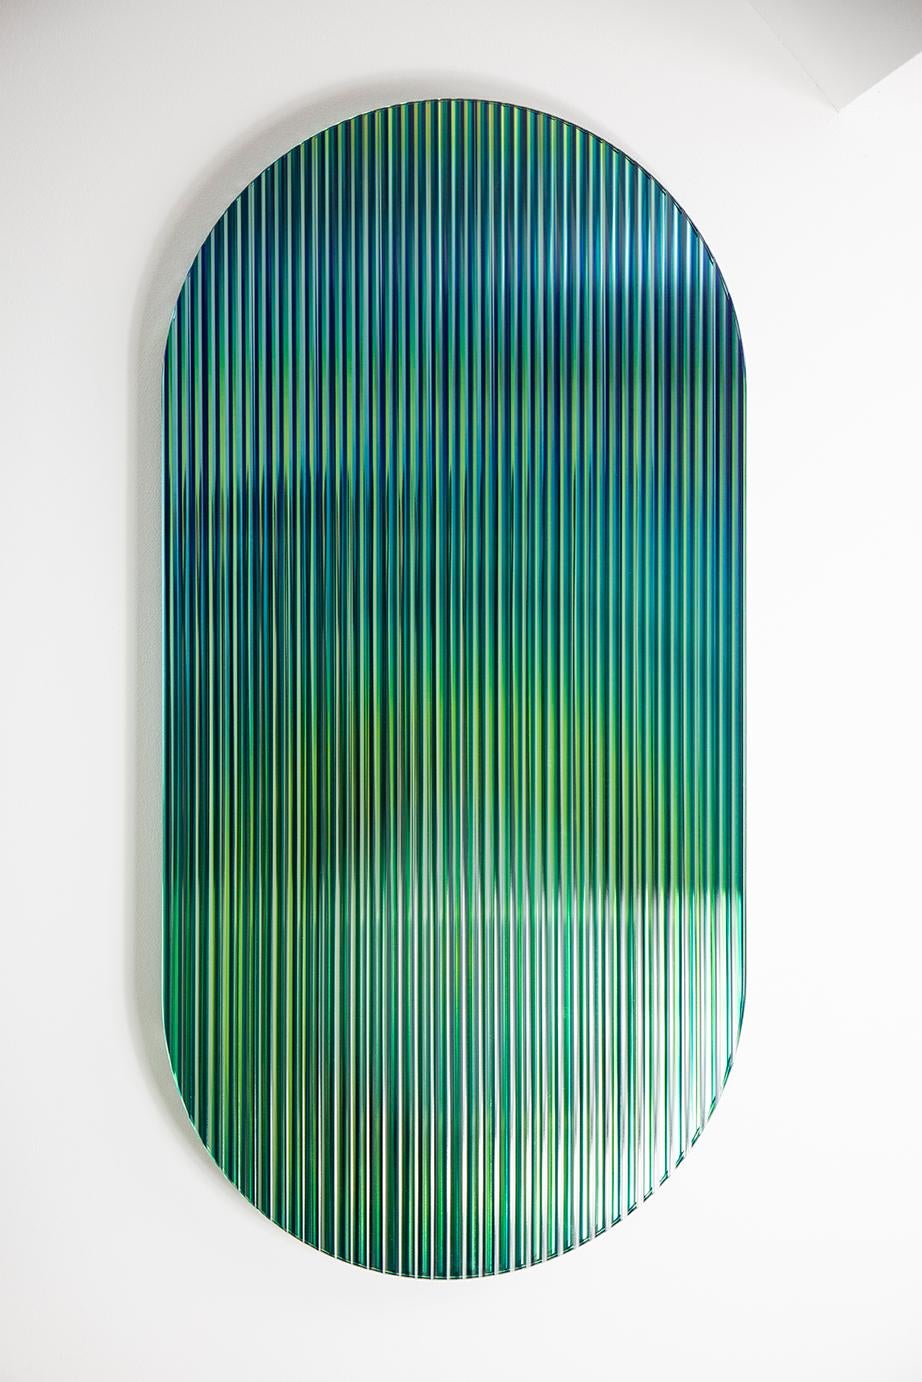 Colour Shift Panel Emerald - Medium - Mixed Media Art by Rive Roshan